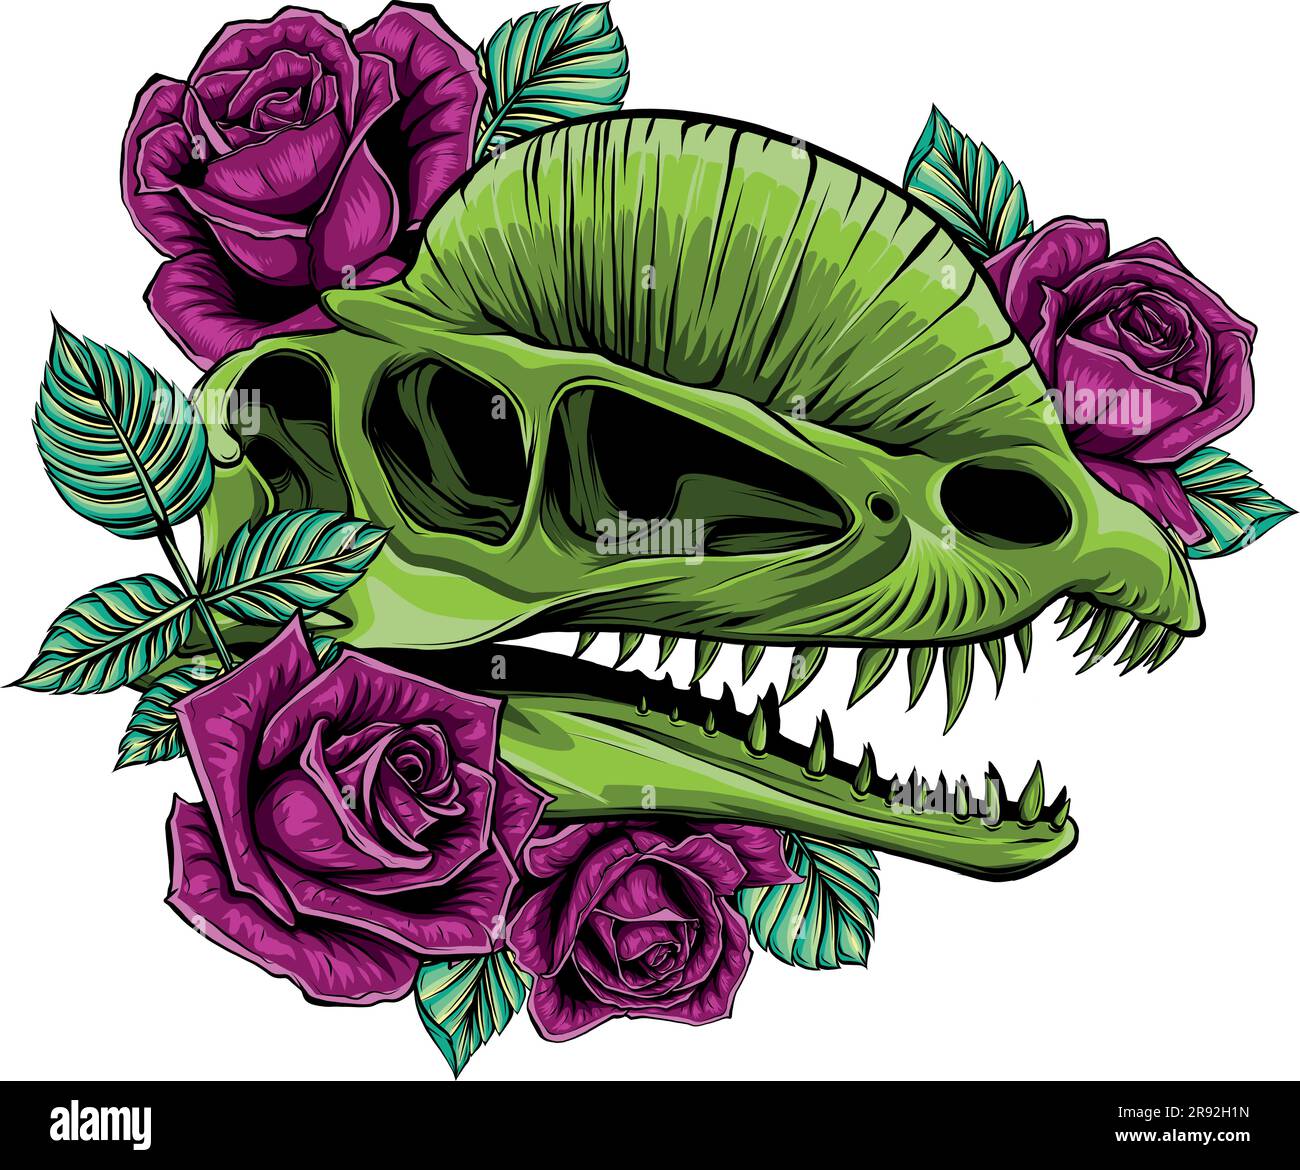 dinosaur head skull with rose artwork design Stock Vector